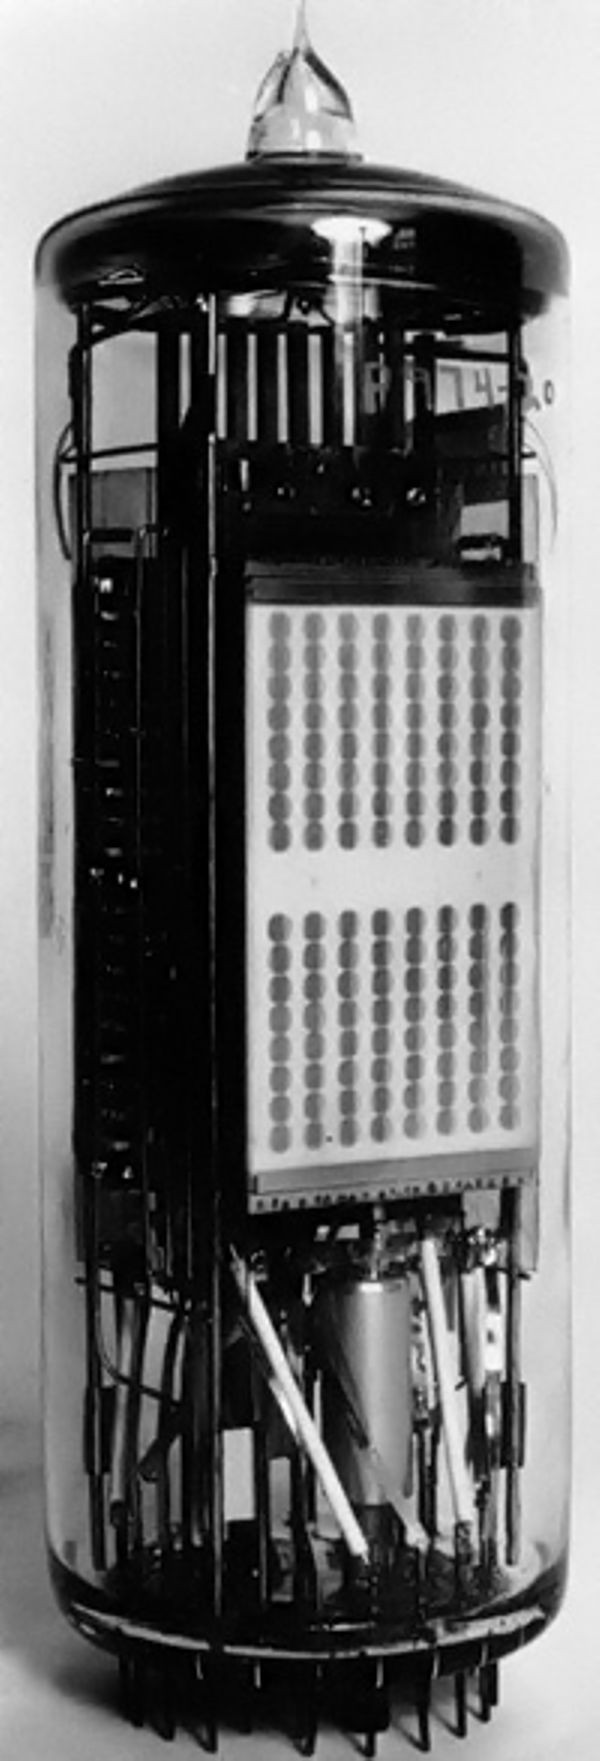 RCA Selectron memory tube